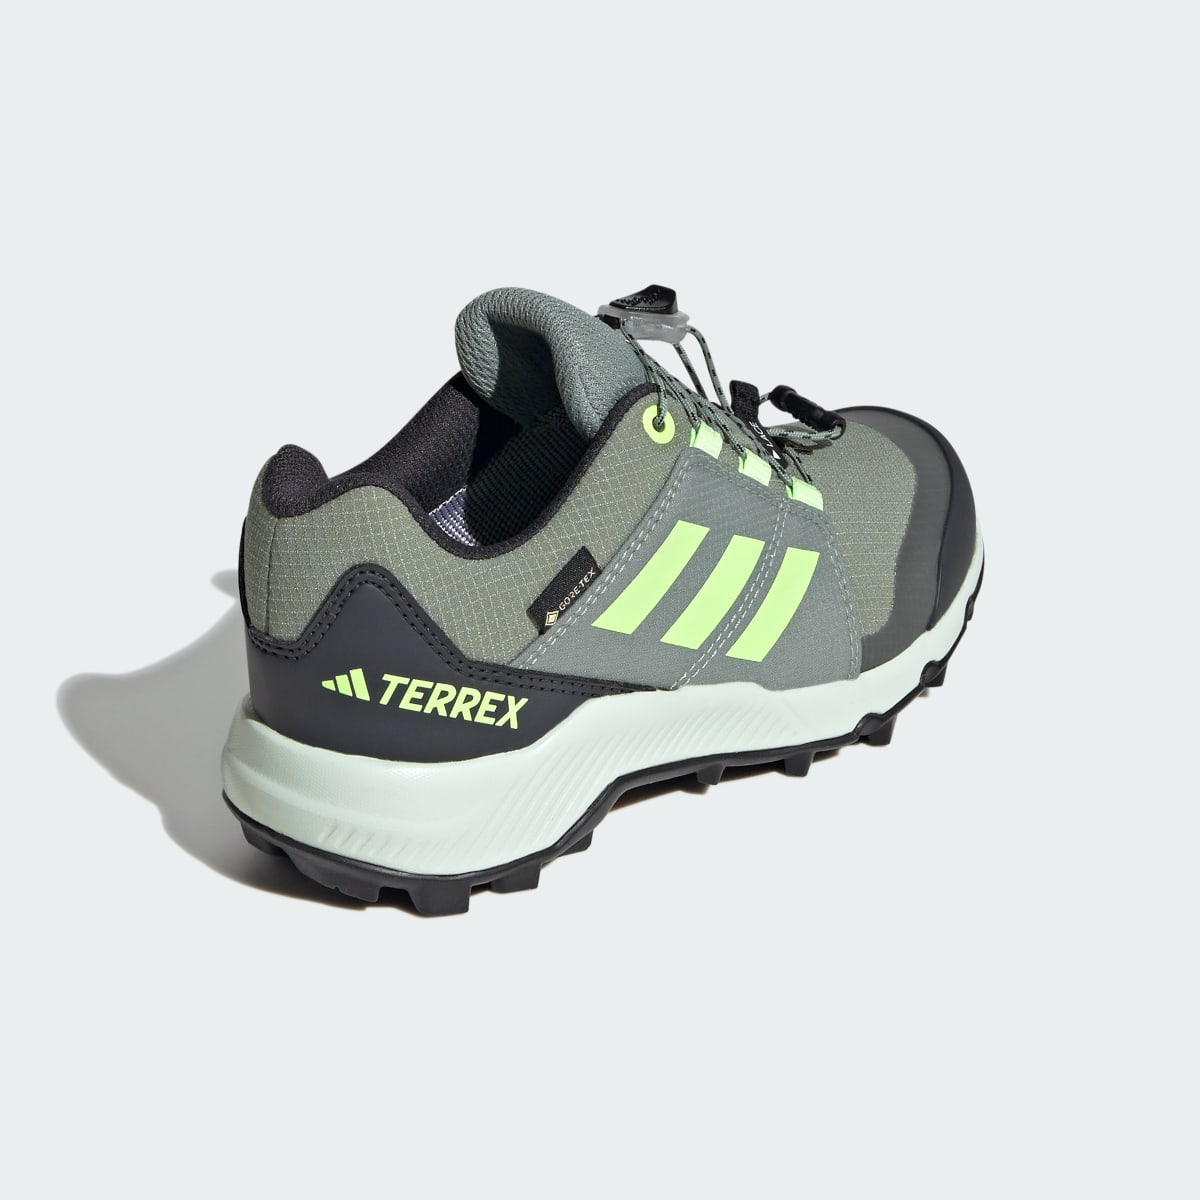 Adidas Scarpe da hiking Terrex GORE-TEX. 6